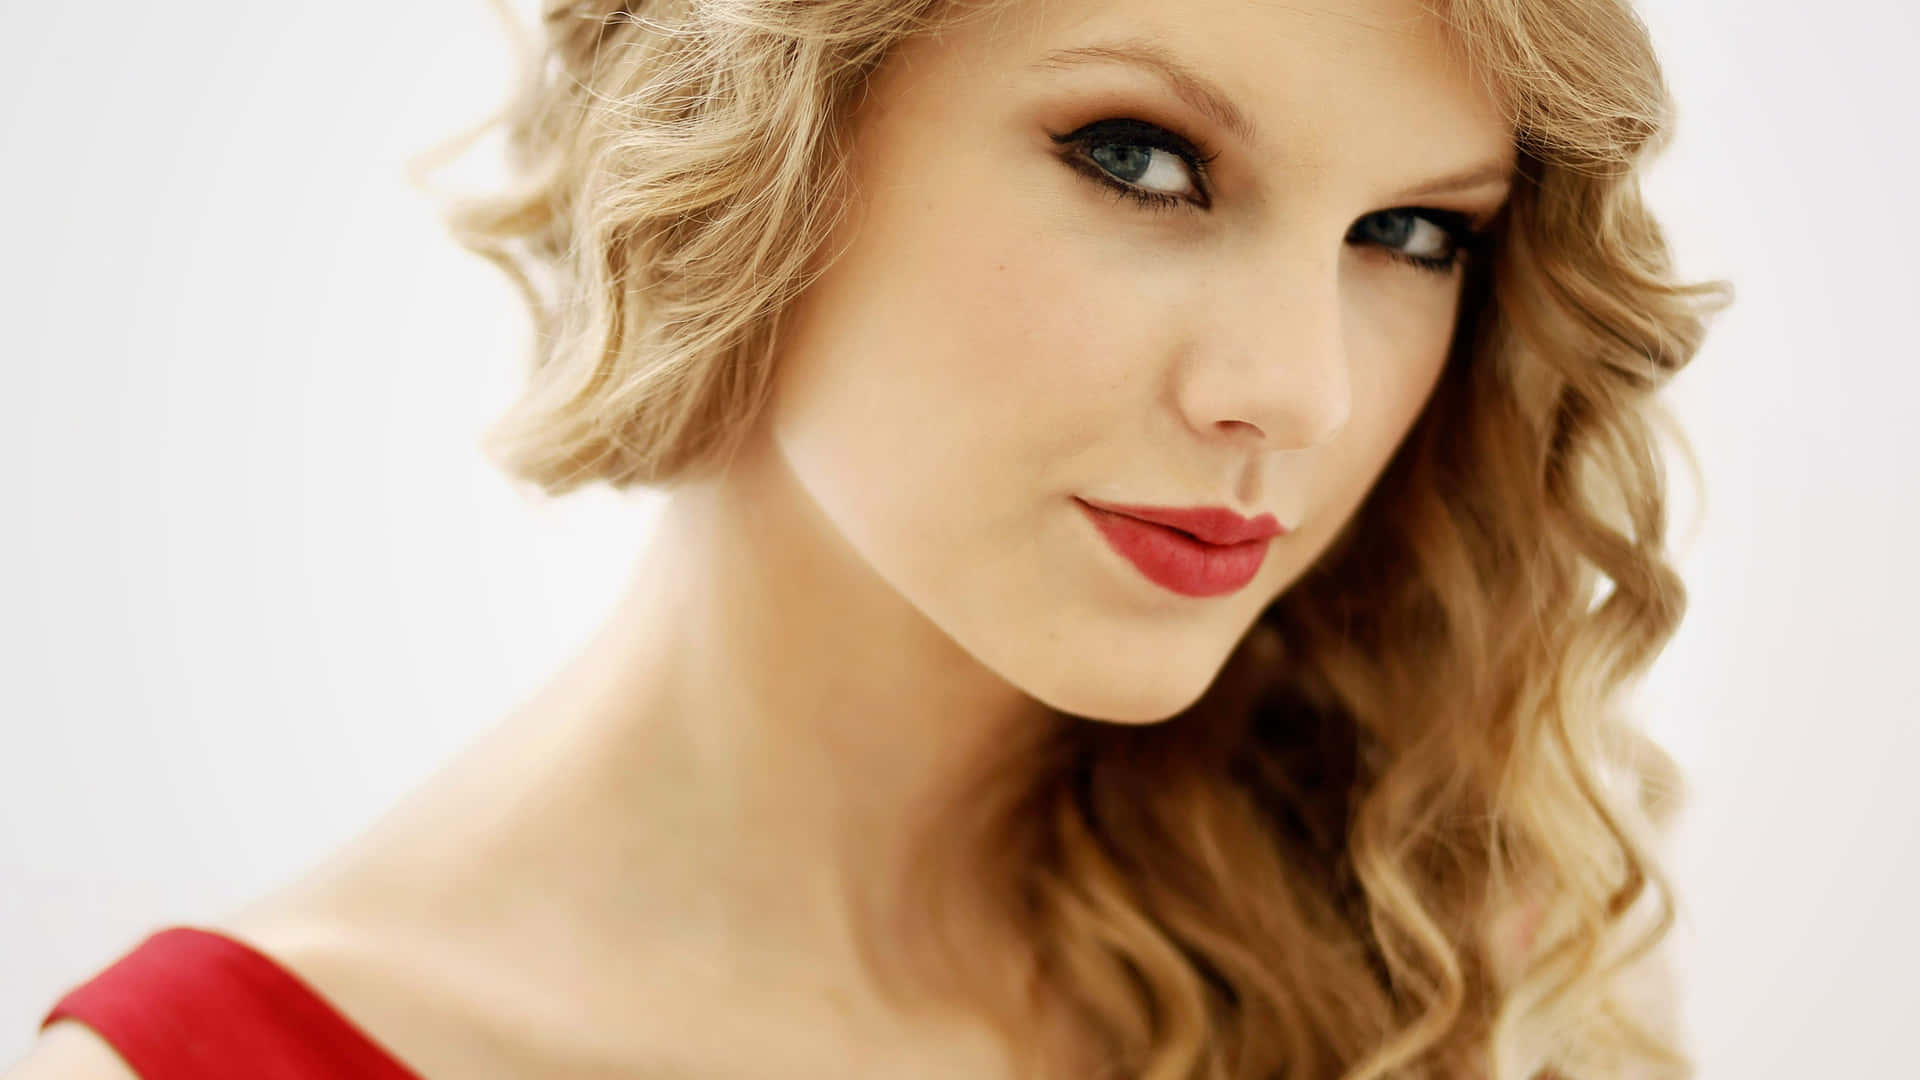 Taylor Swift Close Up Image Background